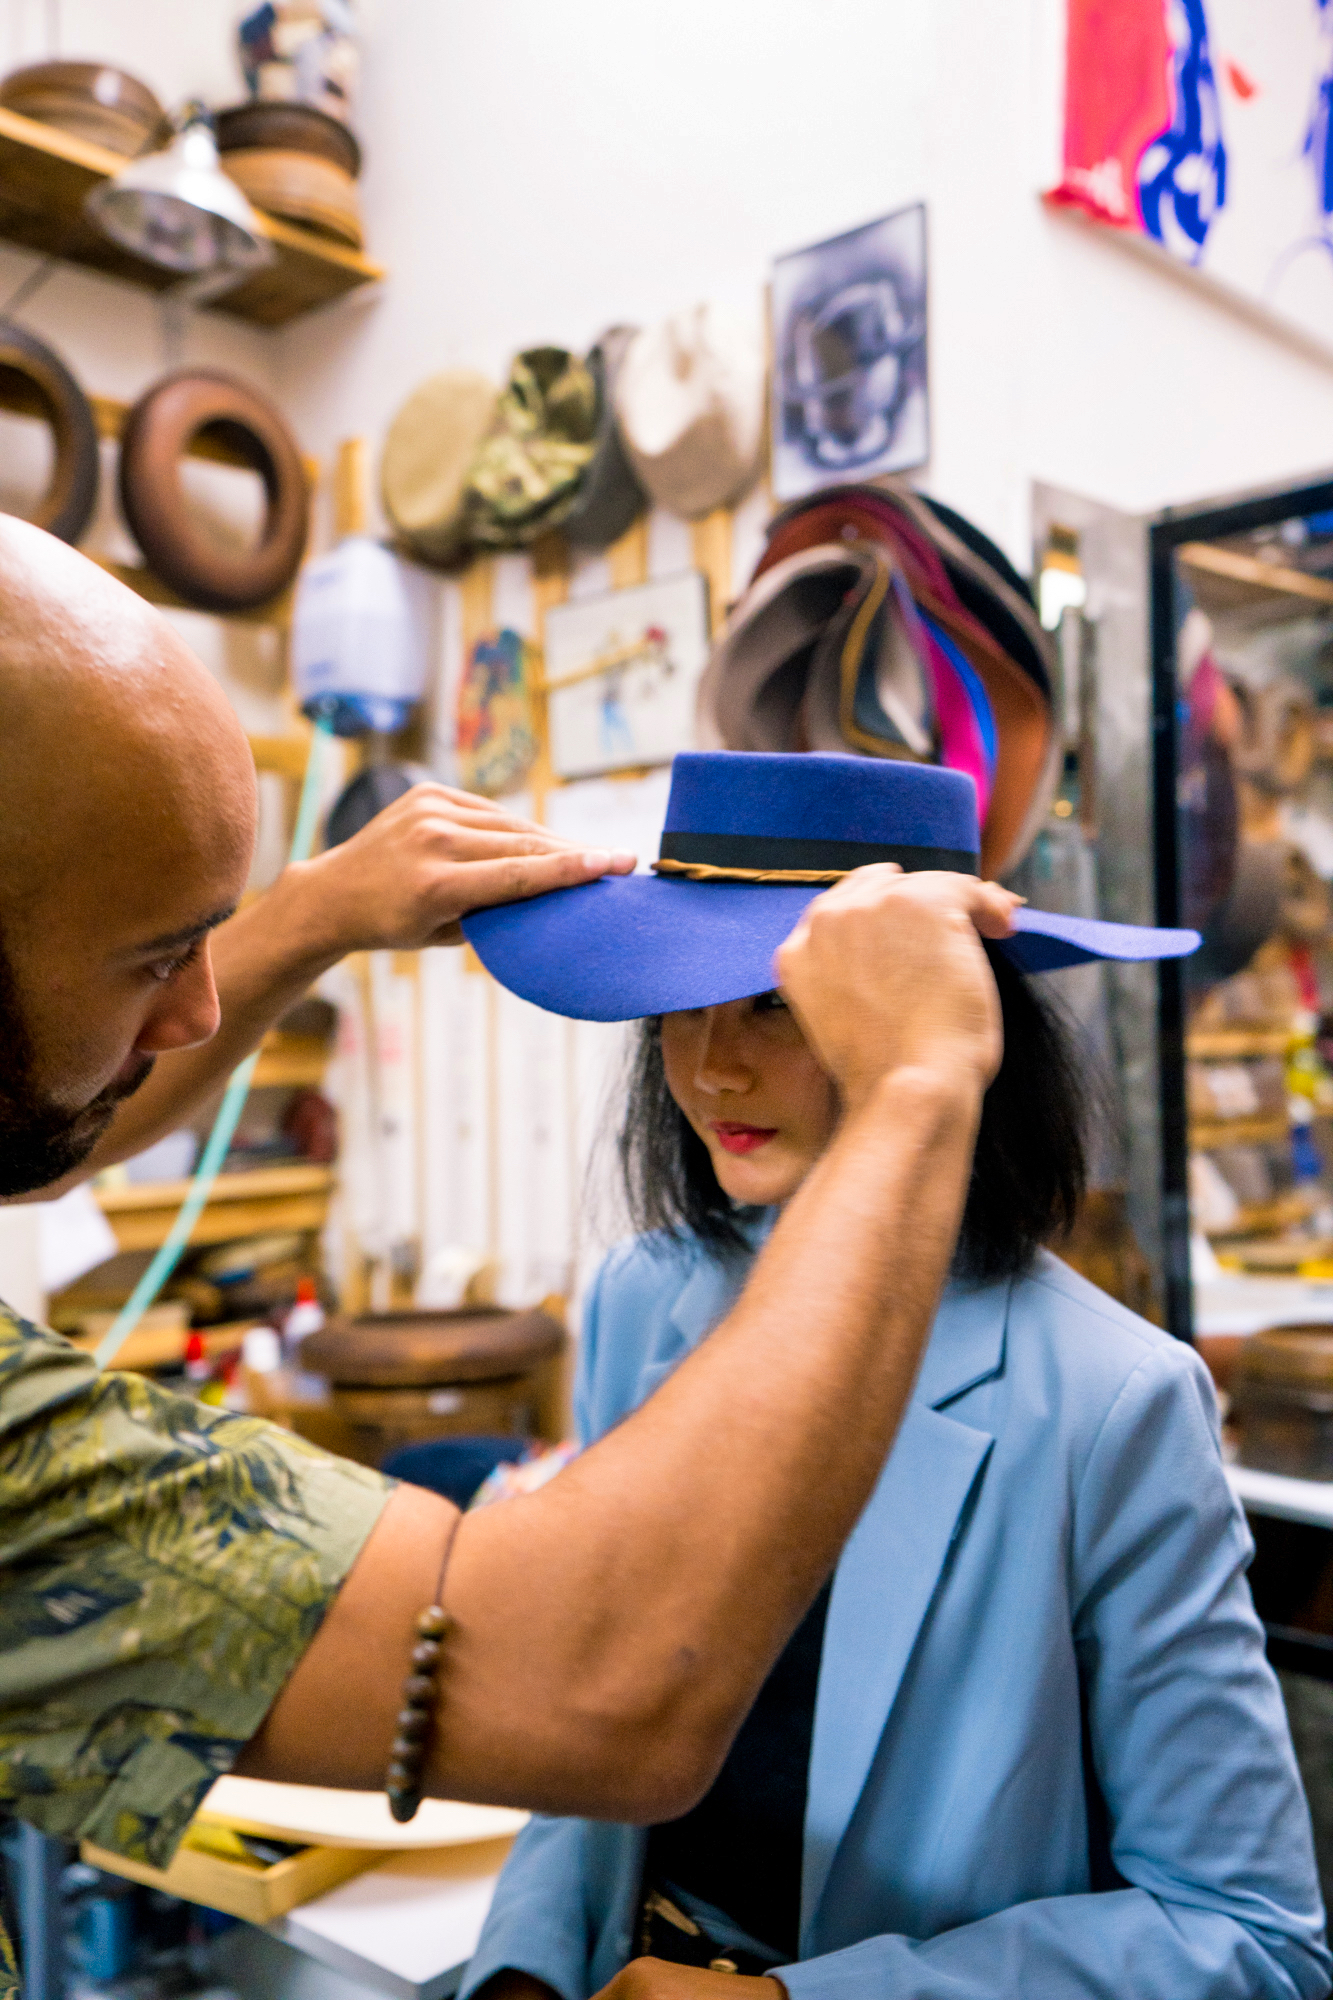 brandon franklin is working on a custom hat for nanphanita that hat girl